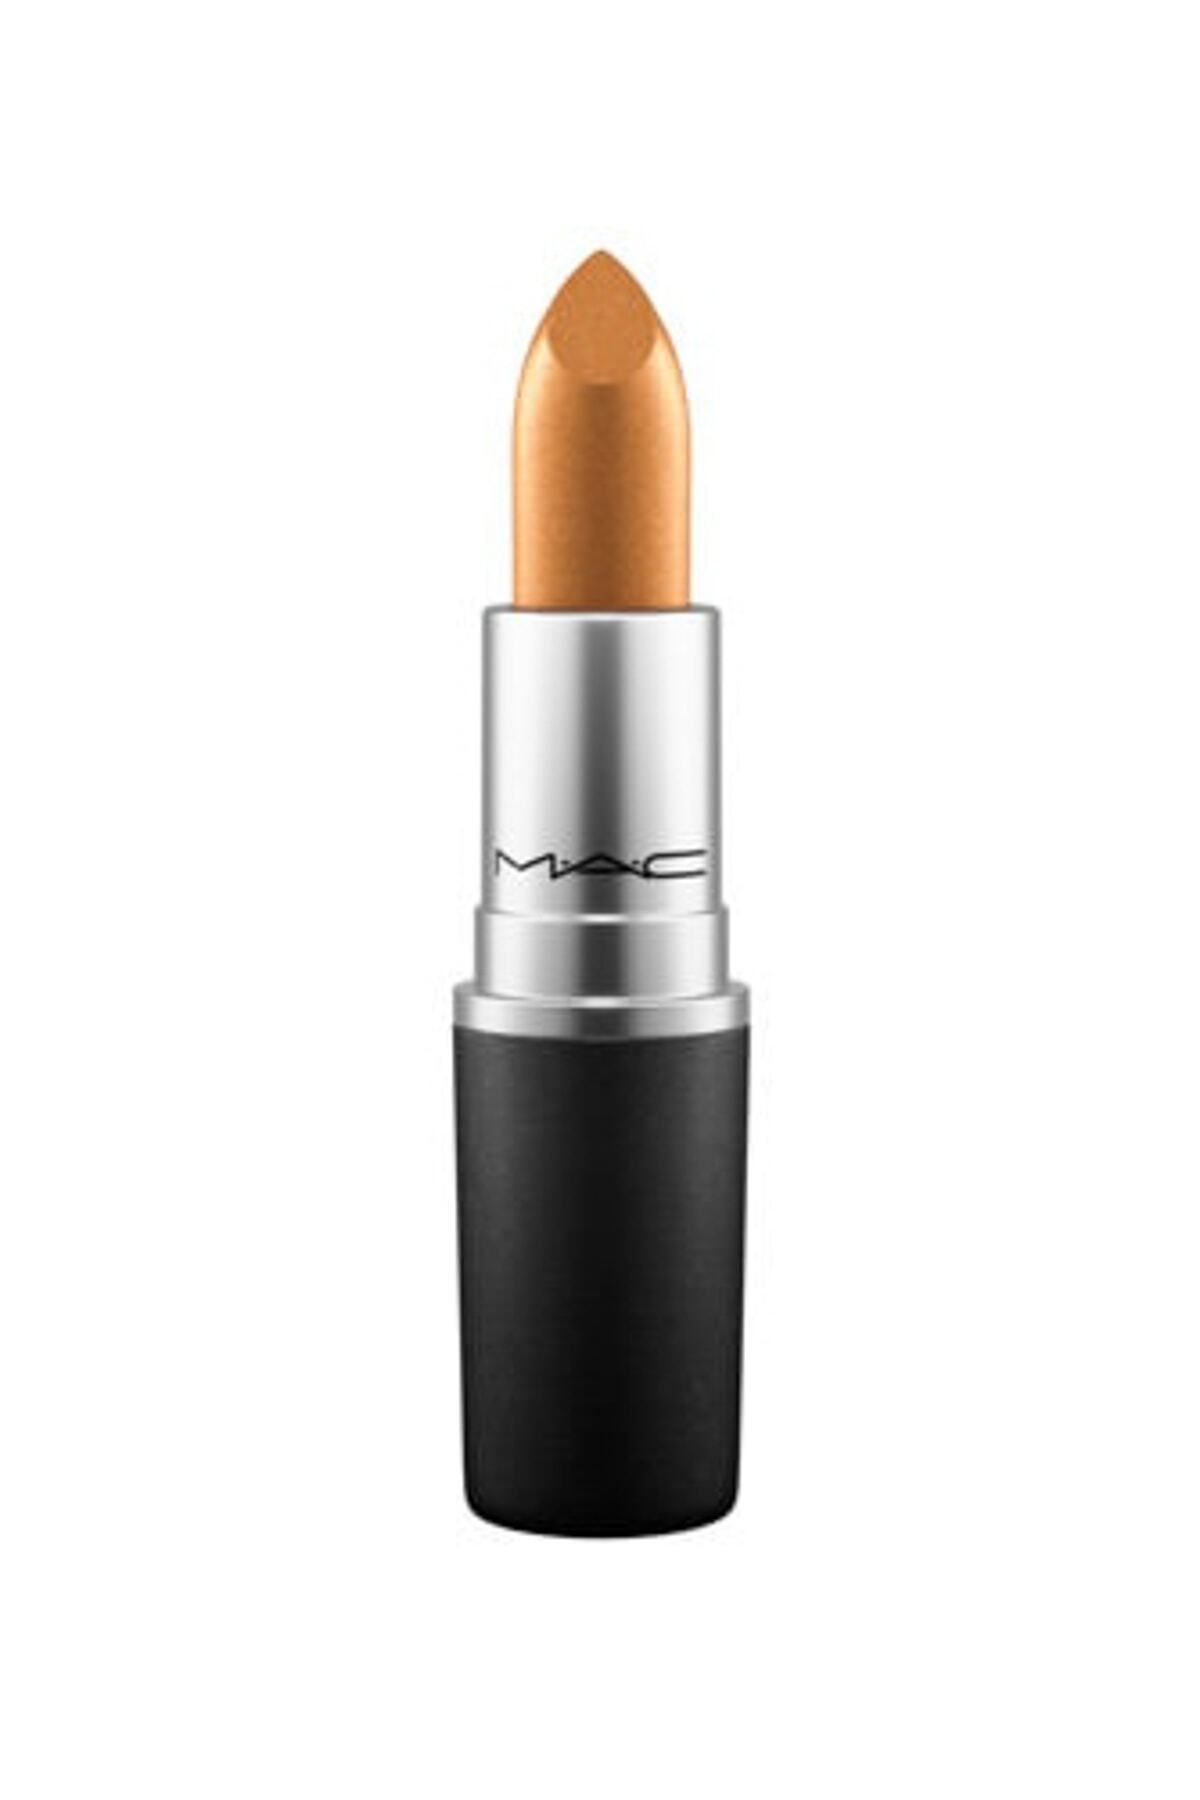 Mac Ruj - Frost Lipstick Bronze Shimmer 773602577088